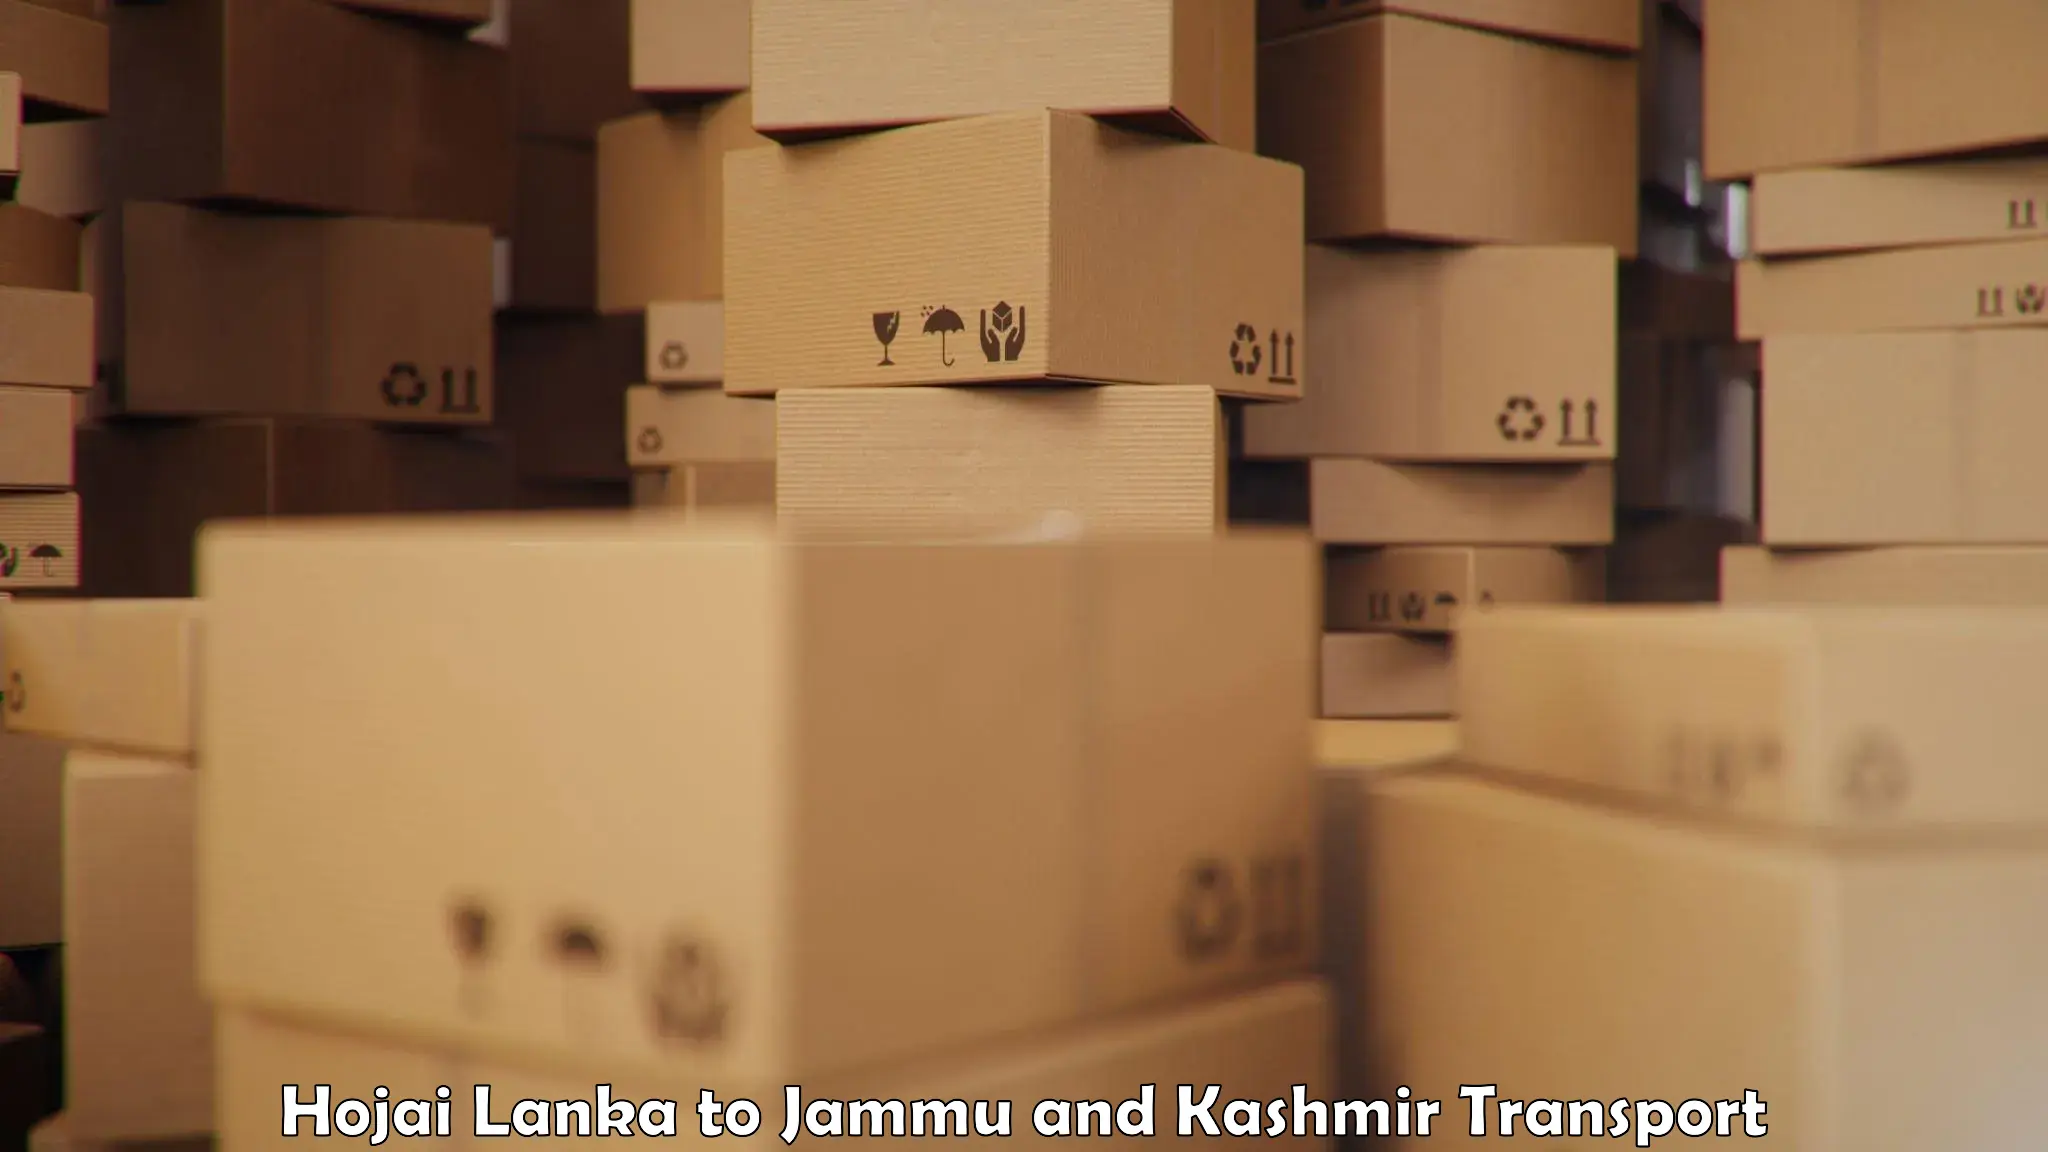 All India transport service Hojai Lanka to University of Jammu